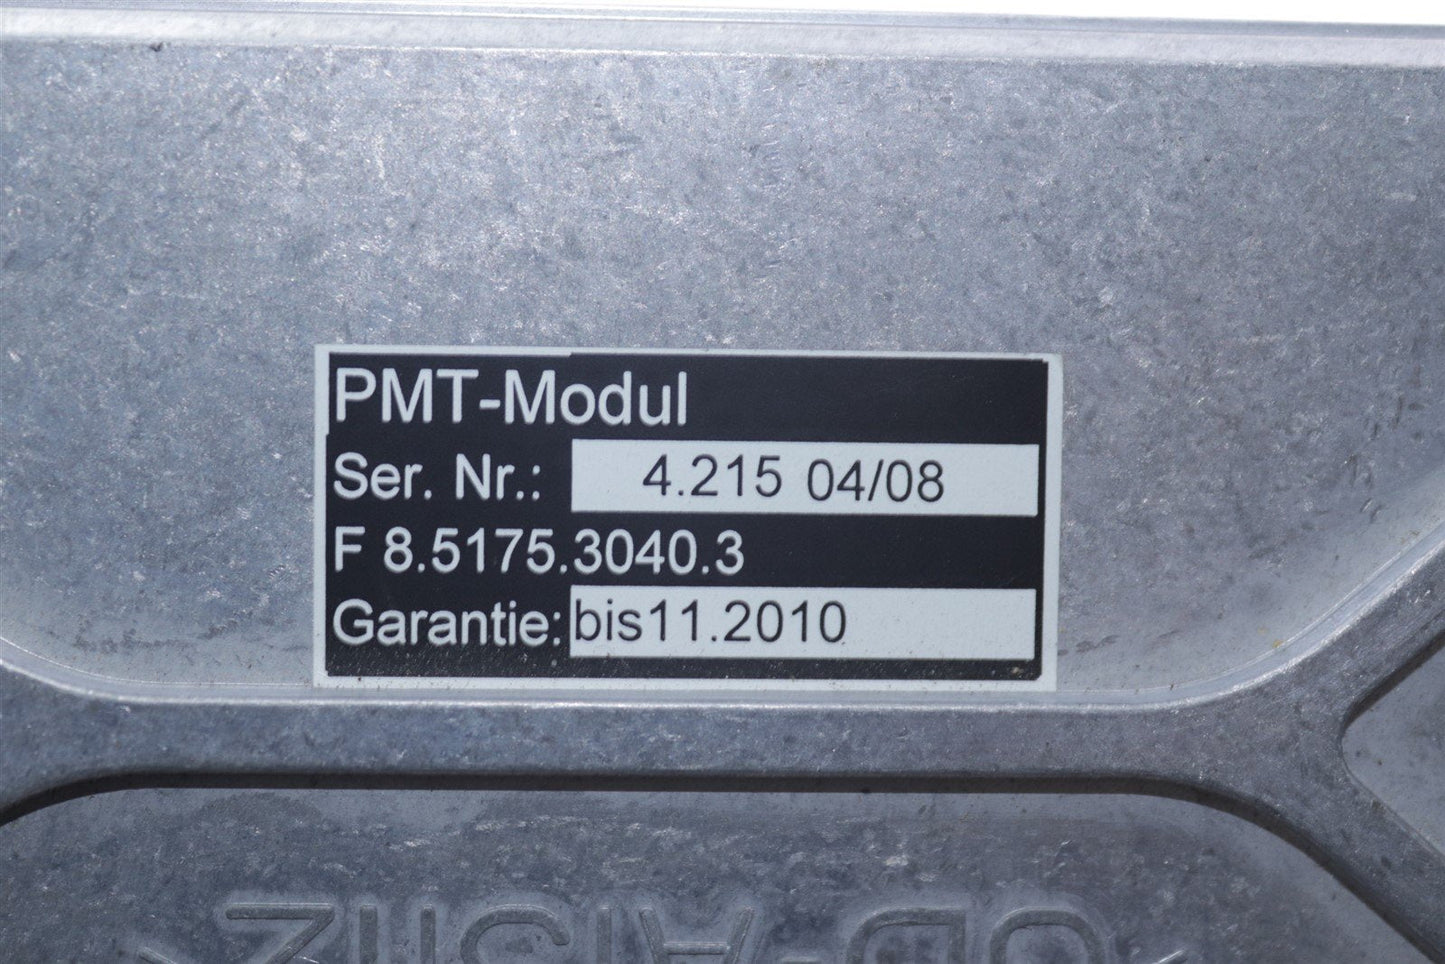 AGFA CR 30-X X-Ray PMT Module F8.5175.3040.3